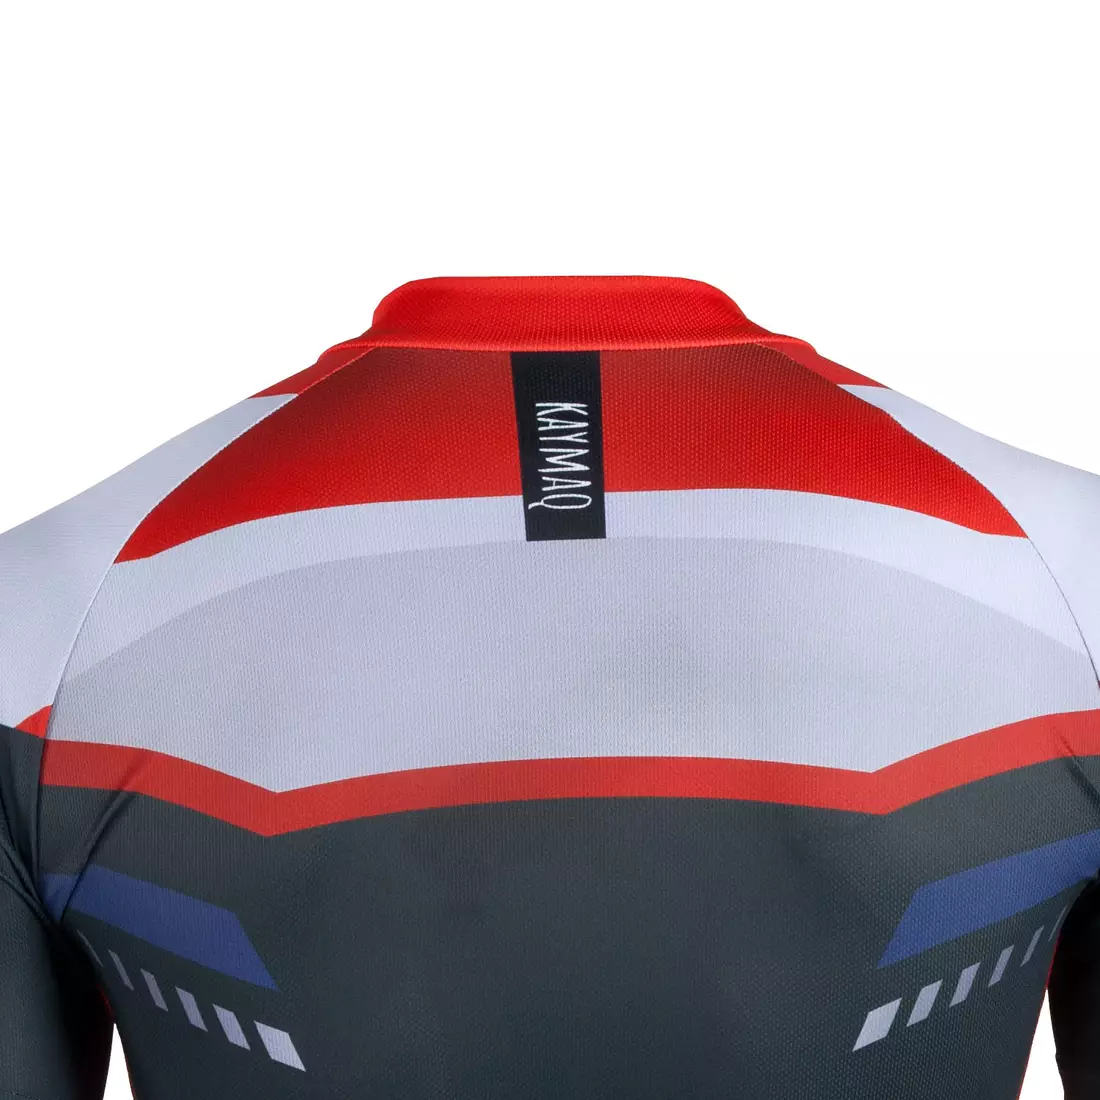 KAYMAQ DESIGN M61 men's cycling jersey red